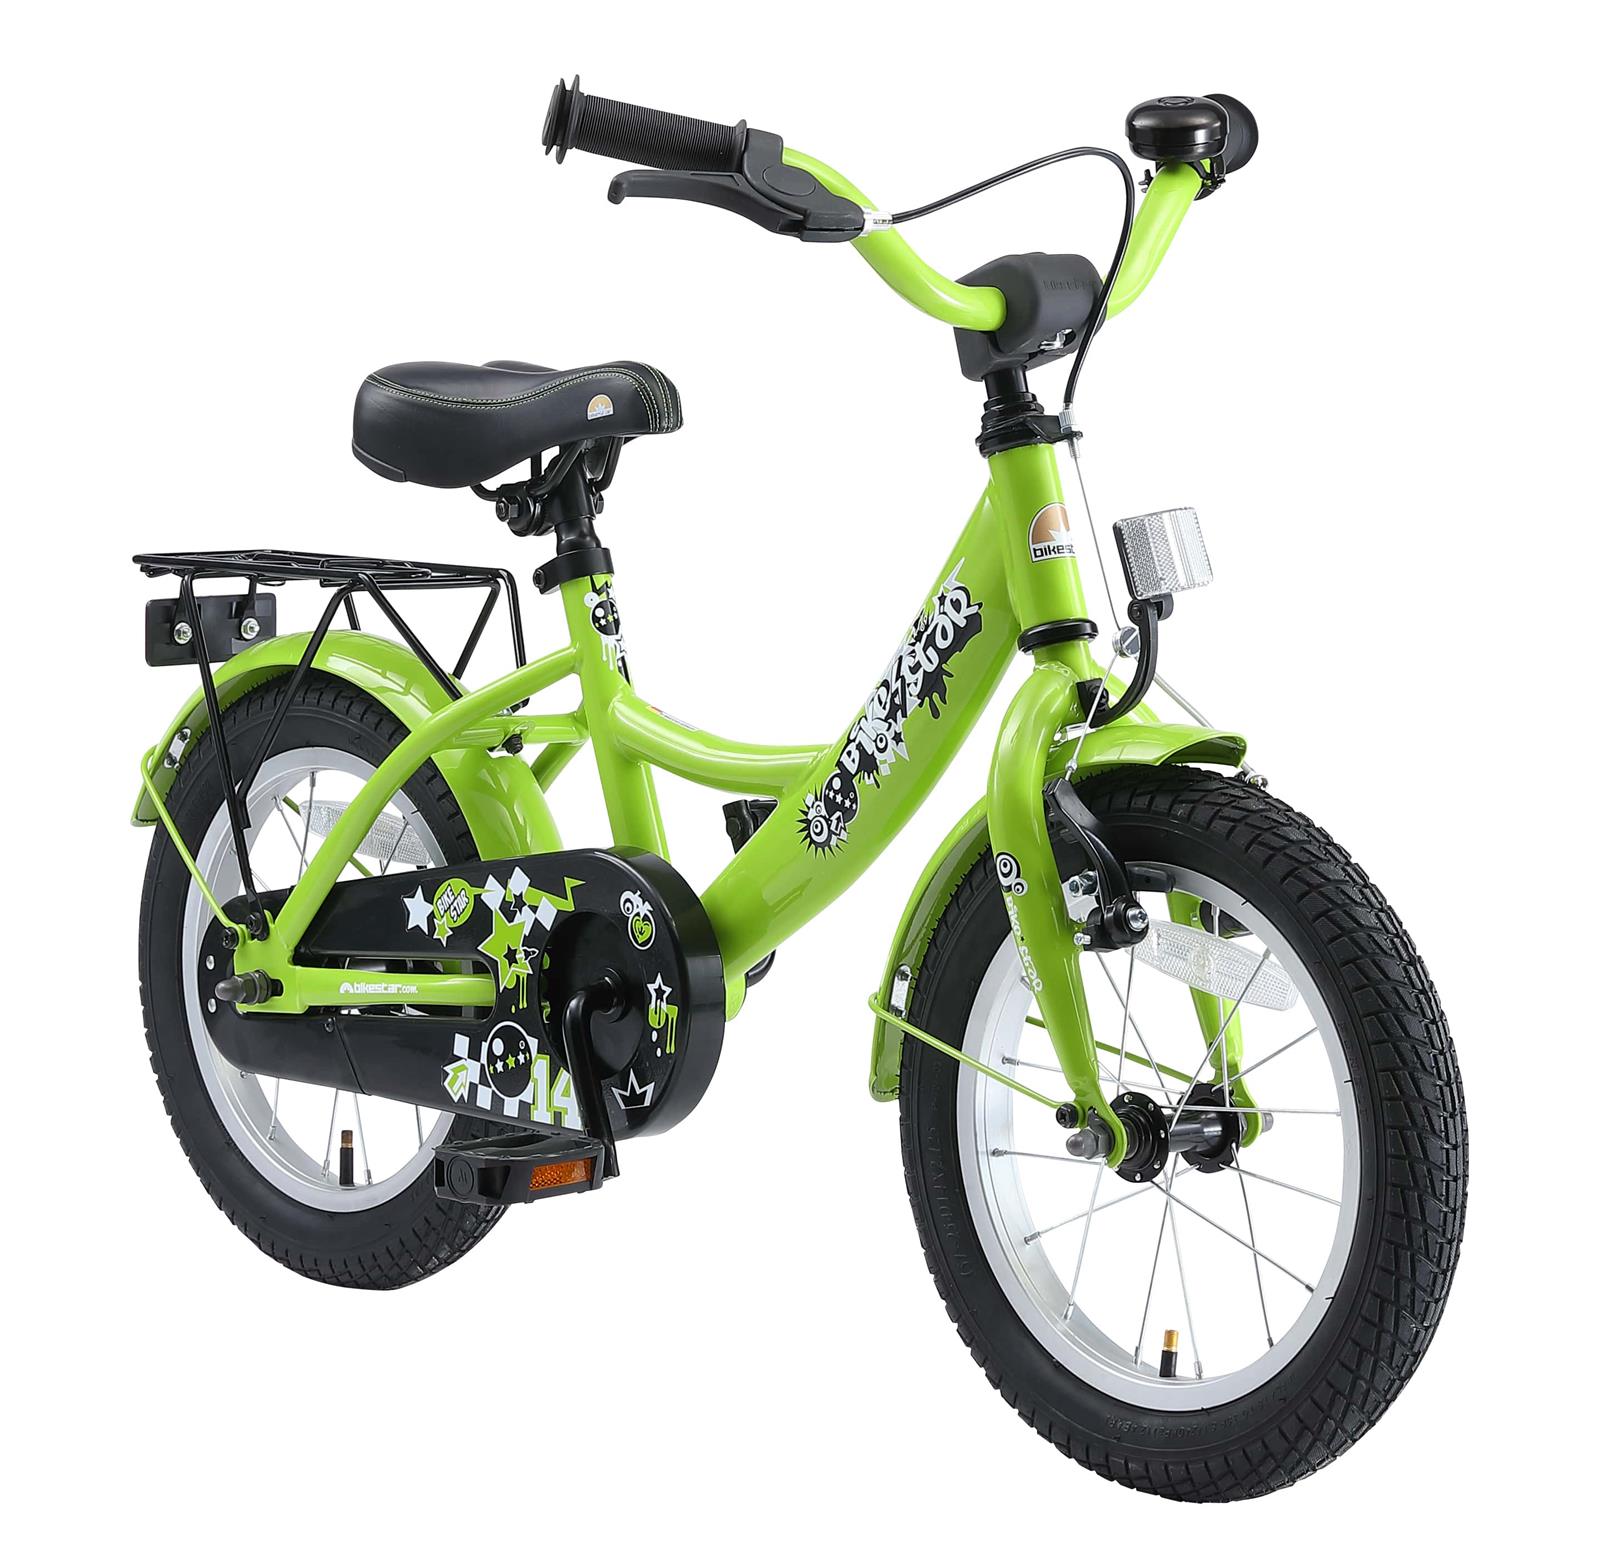 Kinderfahrrad Fahrrad für Kinder ab Jahr 3 Mit Rückbremse Blau Grün 14 Zoll 